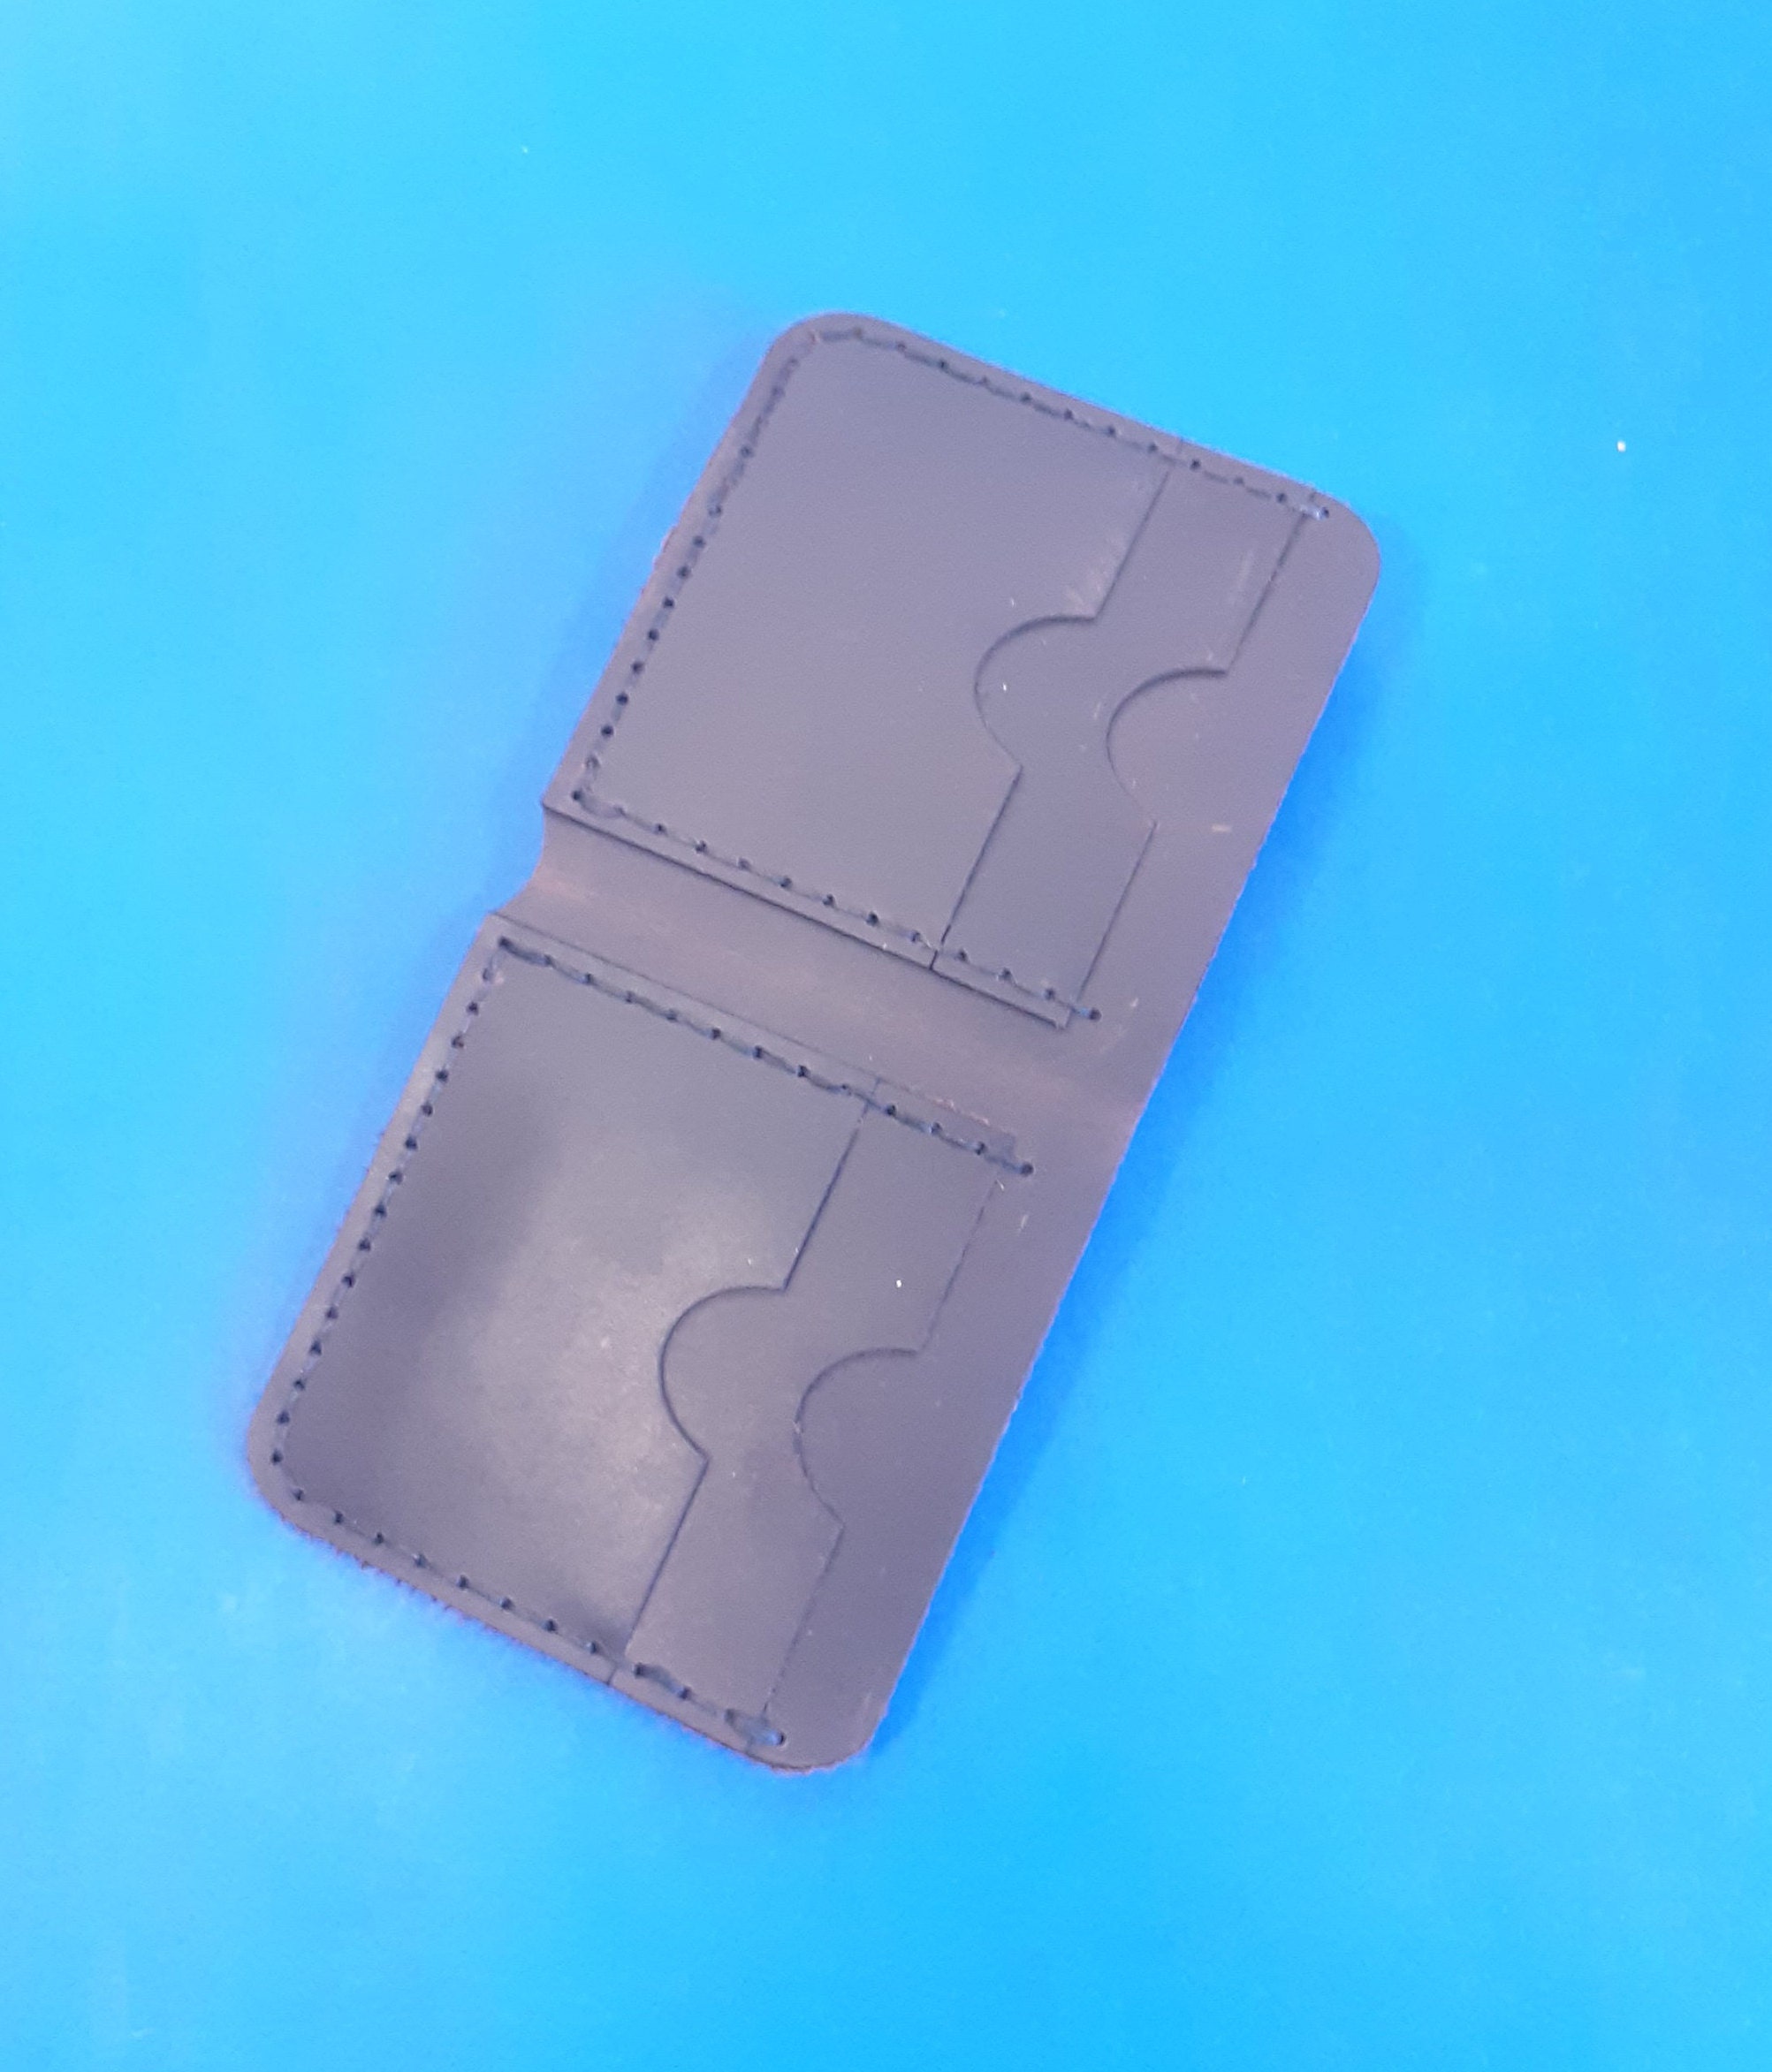 Bi-Fold Leather Wallet Pattern .SVG and .PDF Files Digital | Etsy